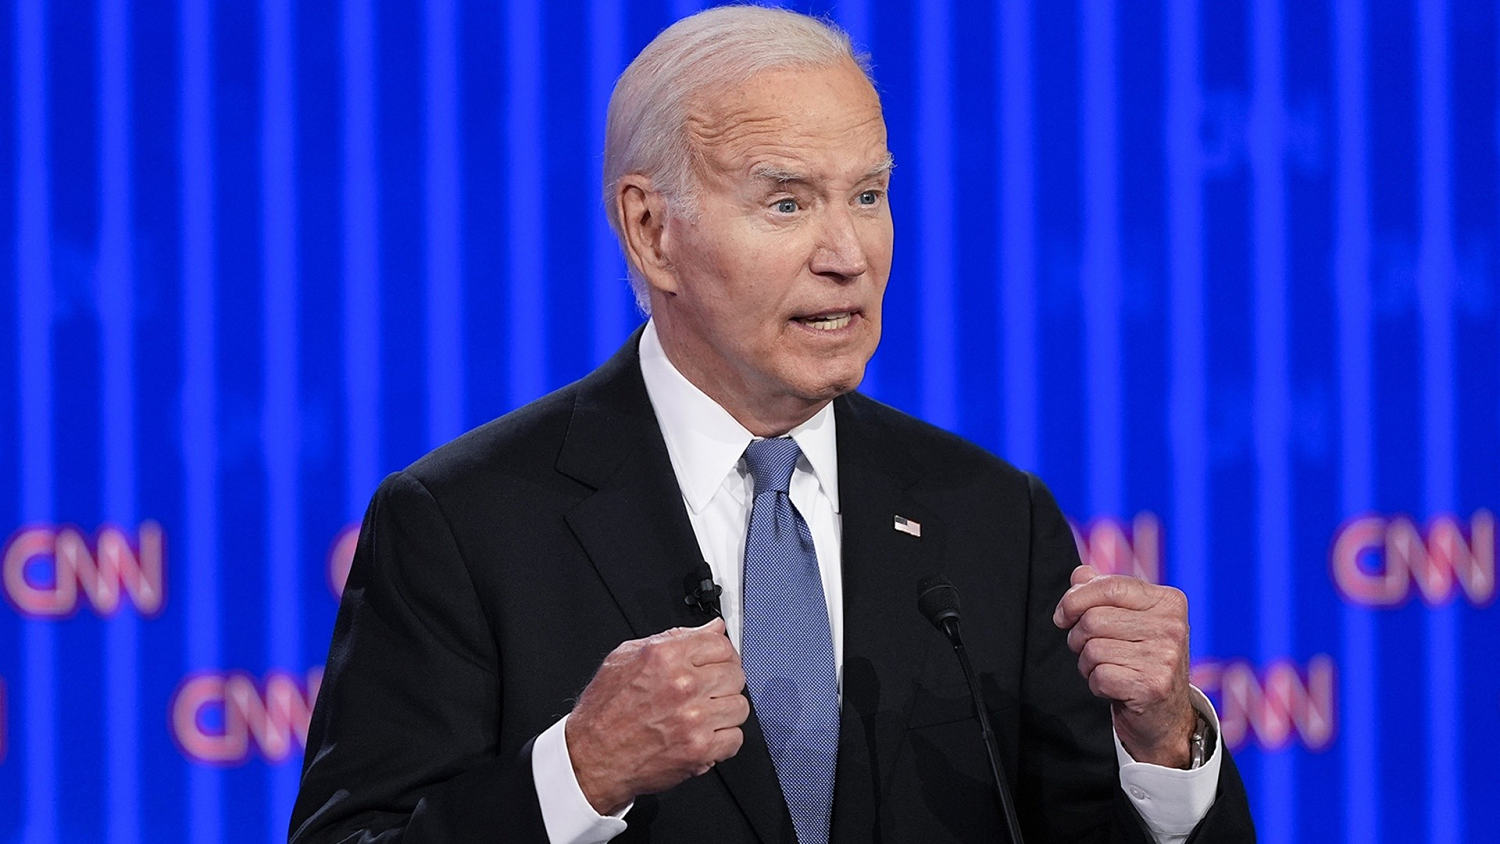 Biden defiant amid calls to step aside: ‘I am running’